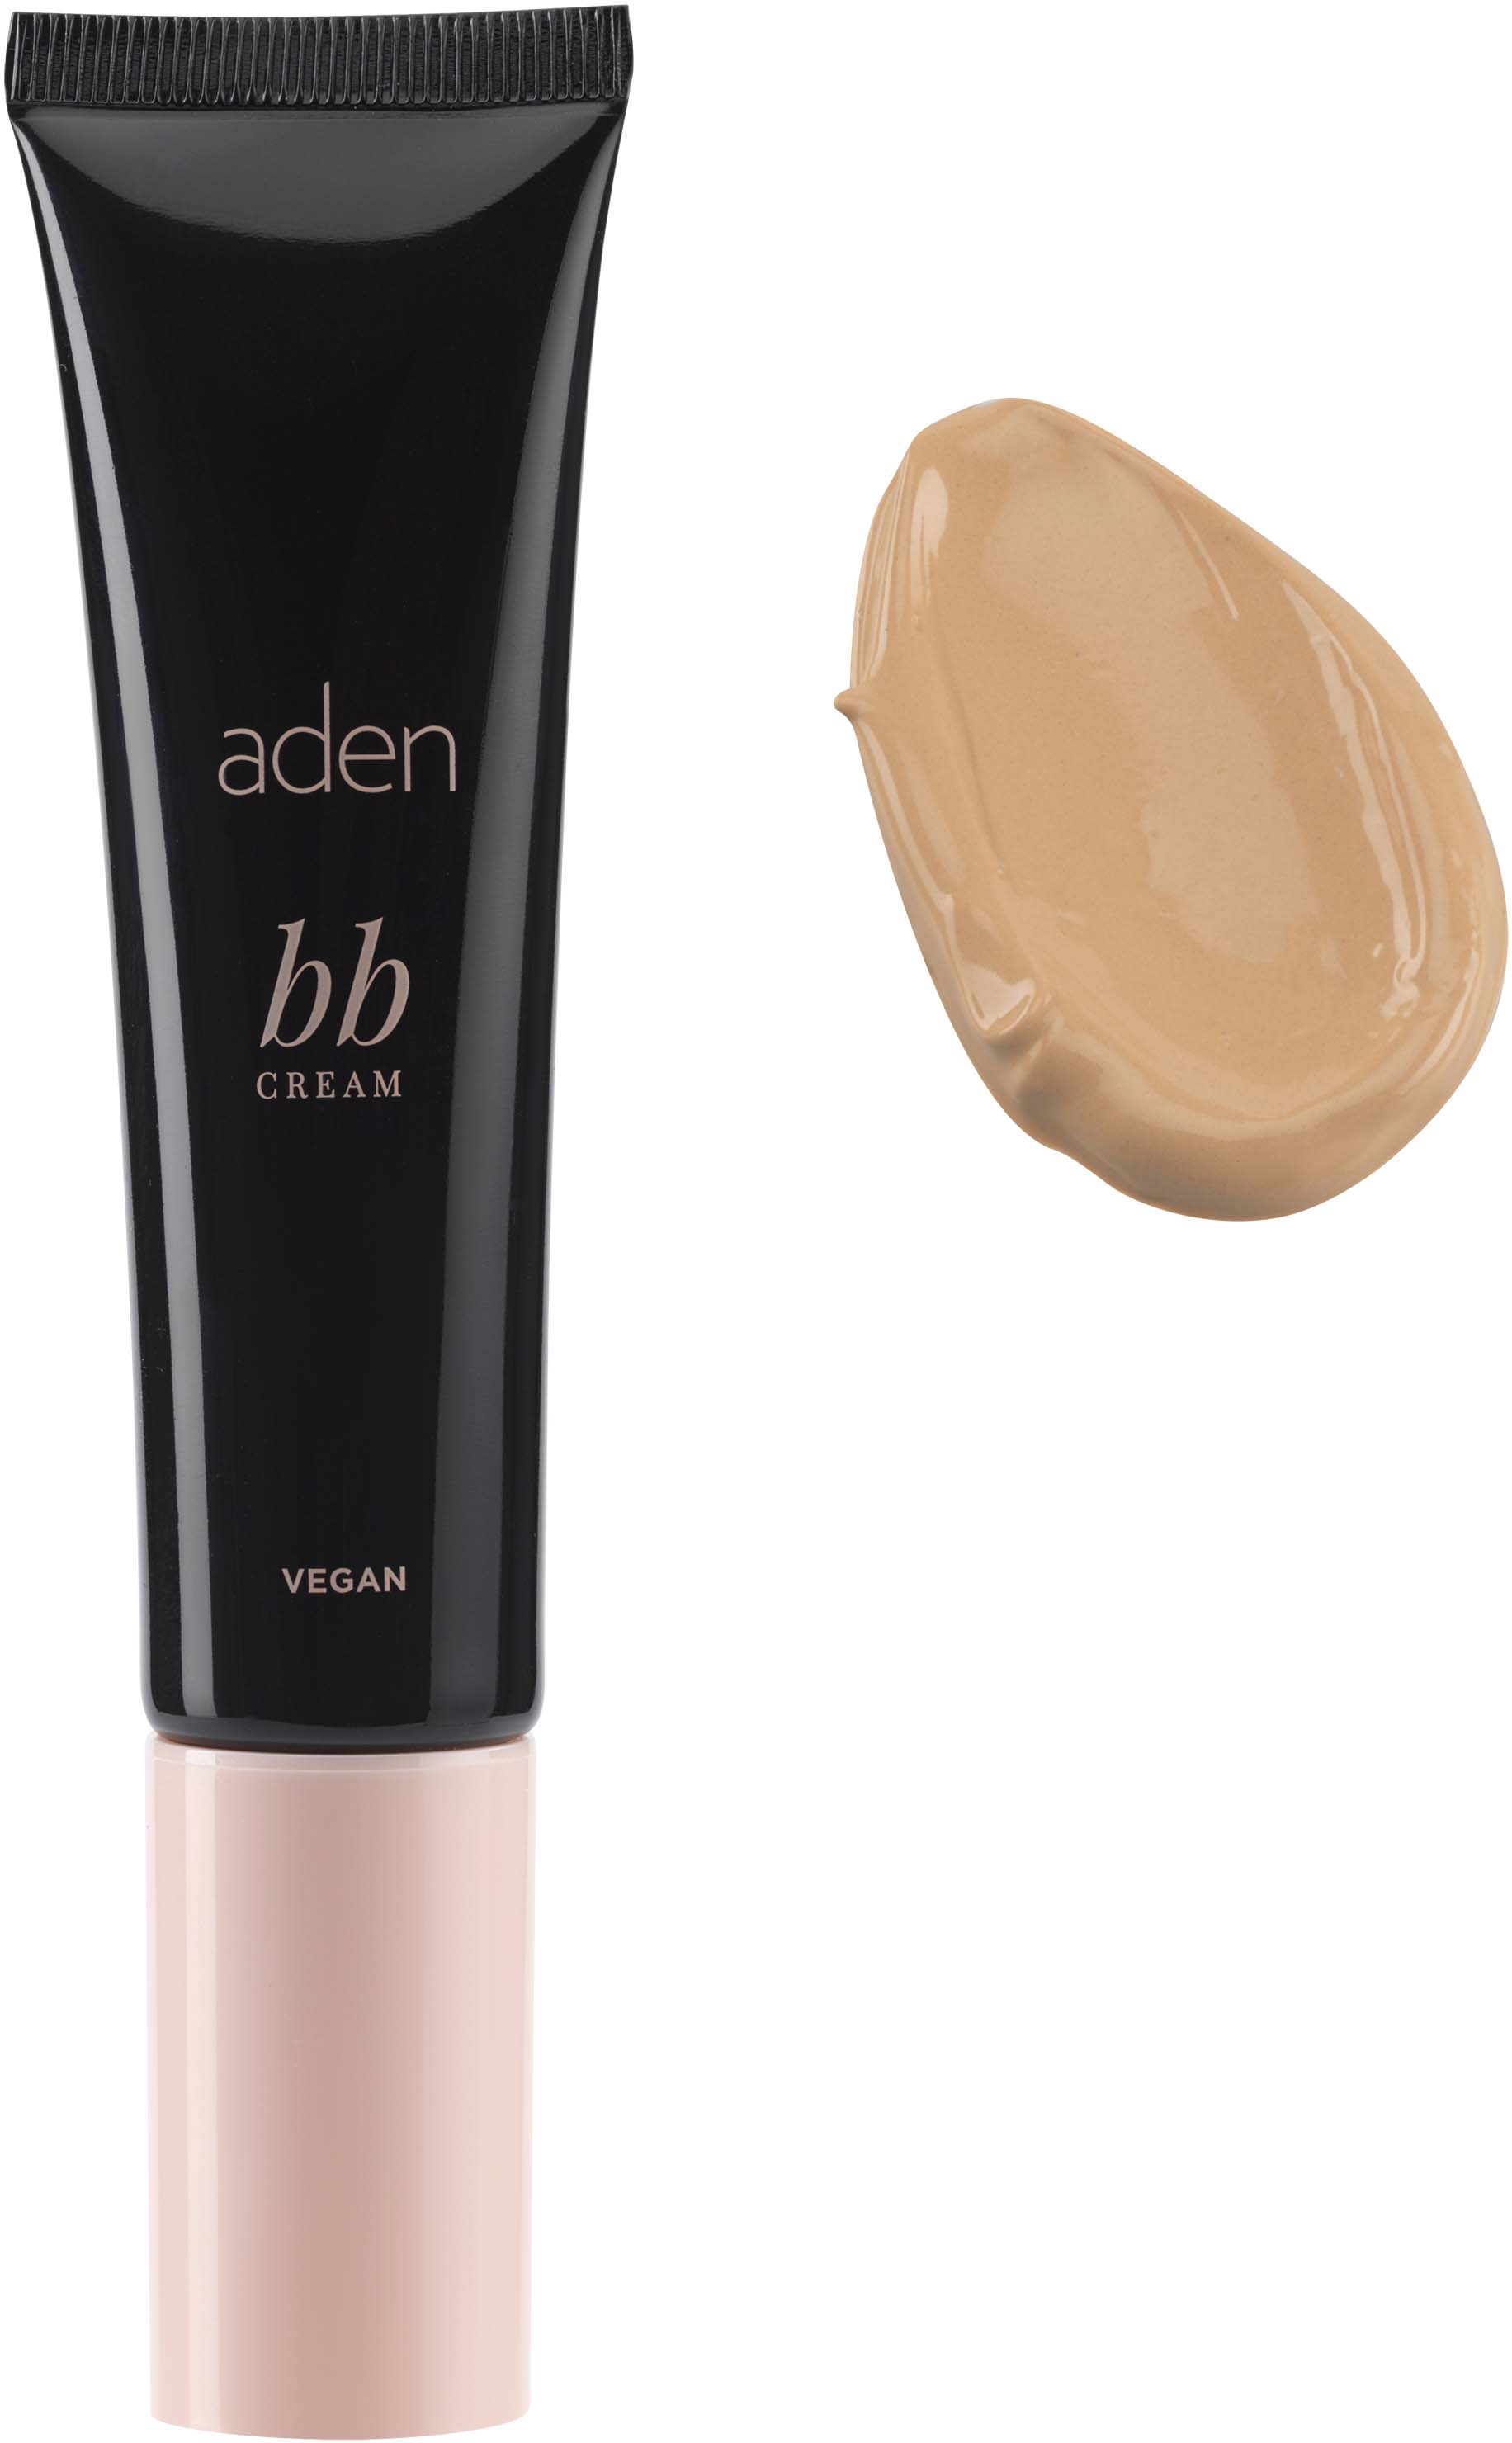 Aden BB Cream 01 UV-protection 40 ml